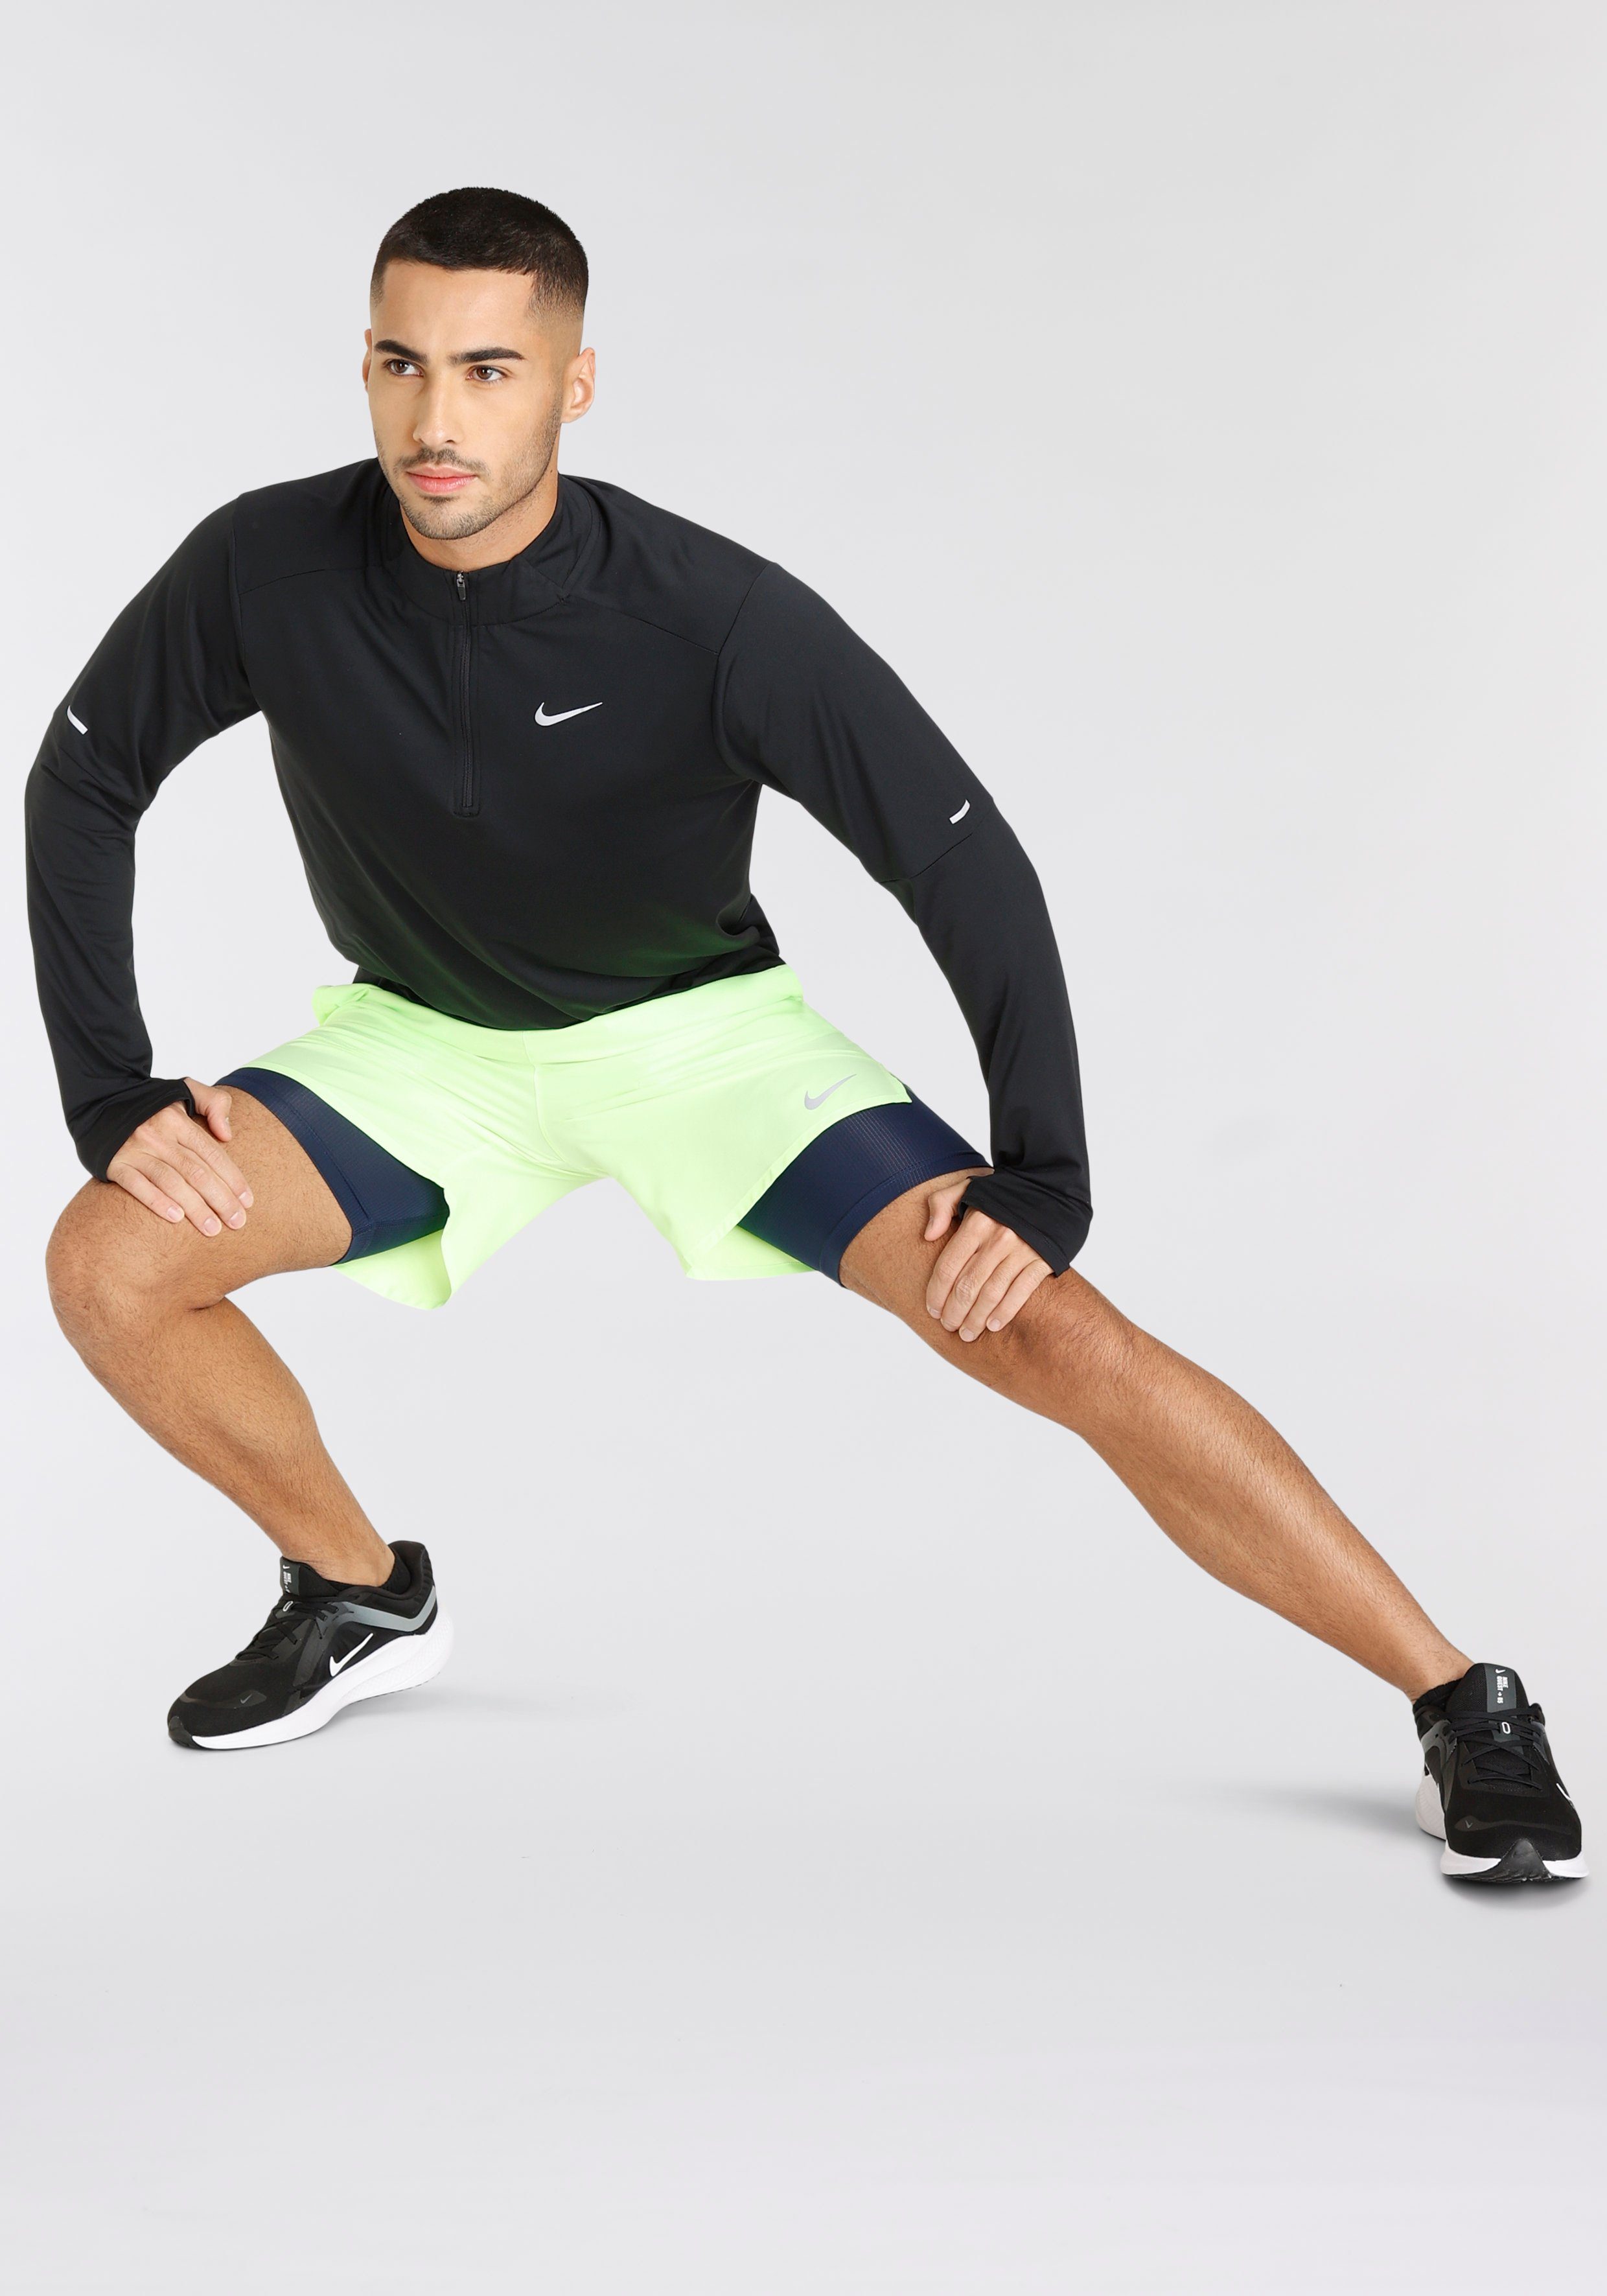 Top Men's Dri-FIT Laufshirt 1/-Zip Nike schwarz Element Running